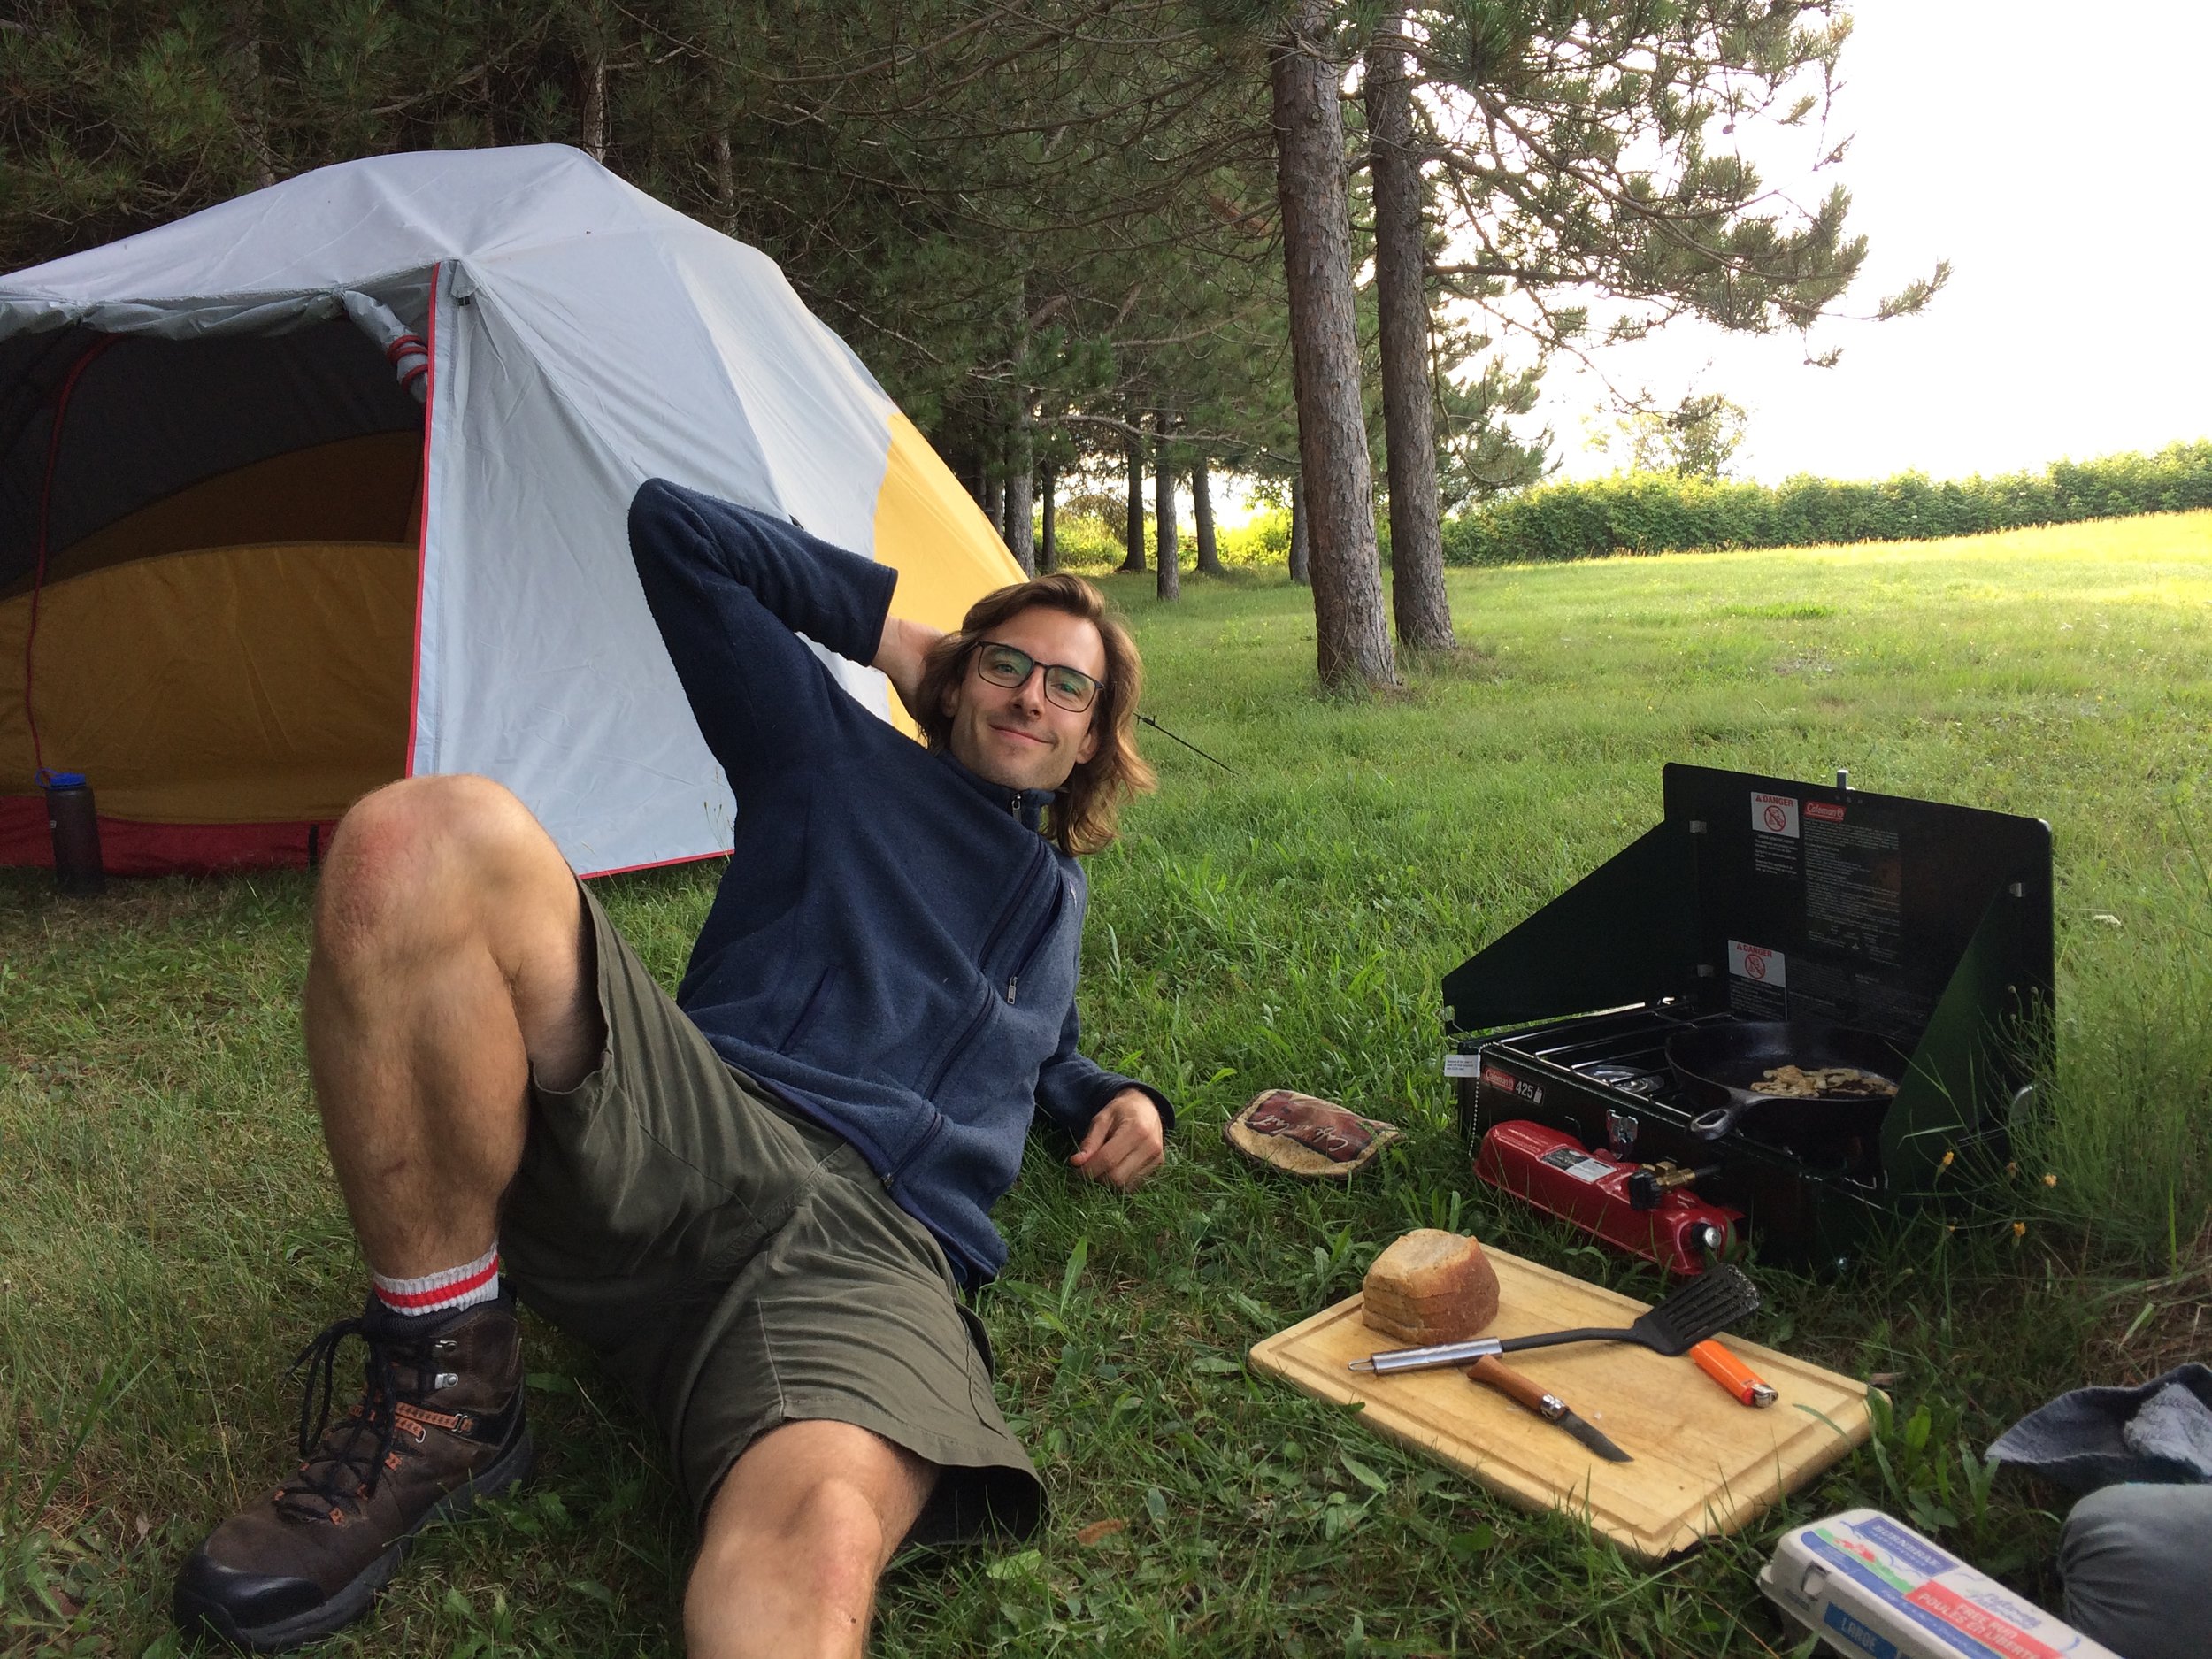  Mat is always a model camper. 